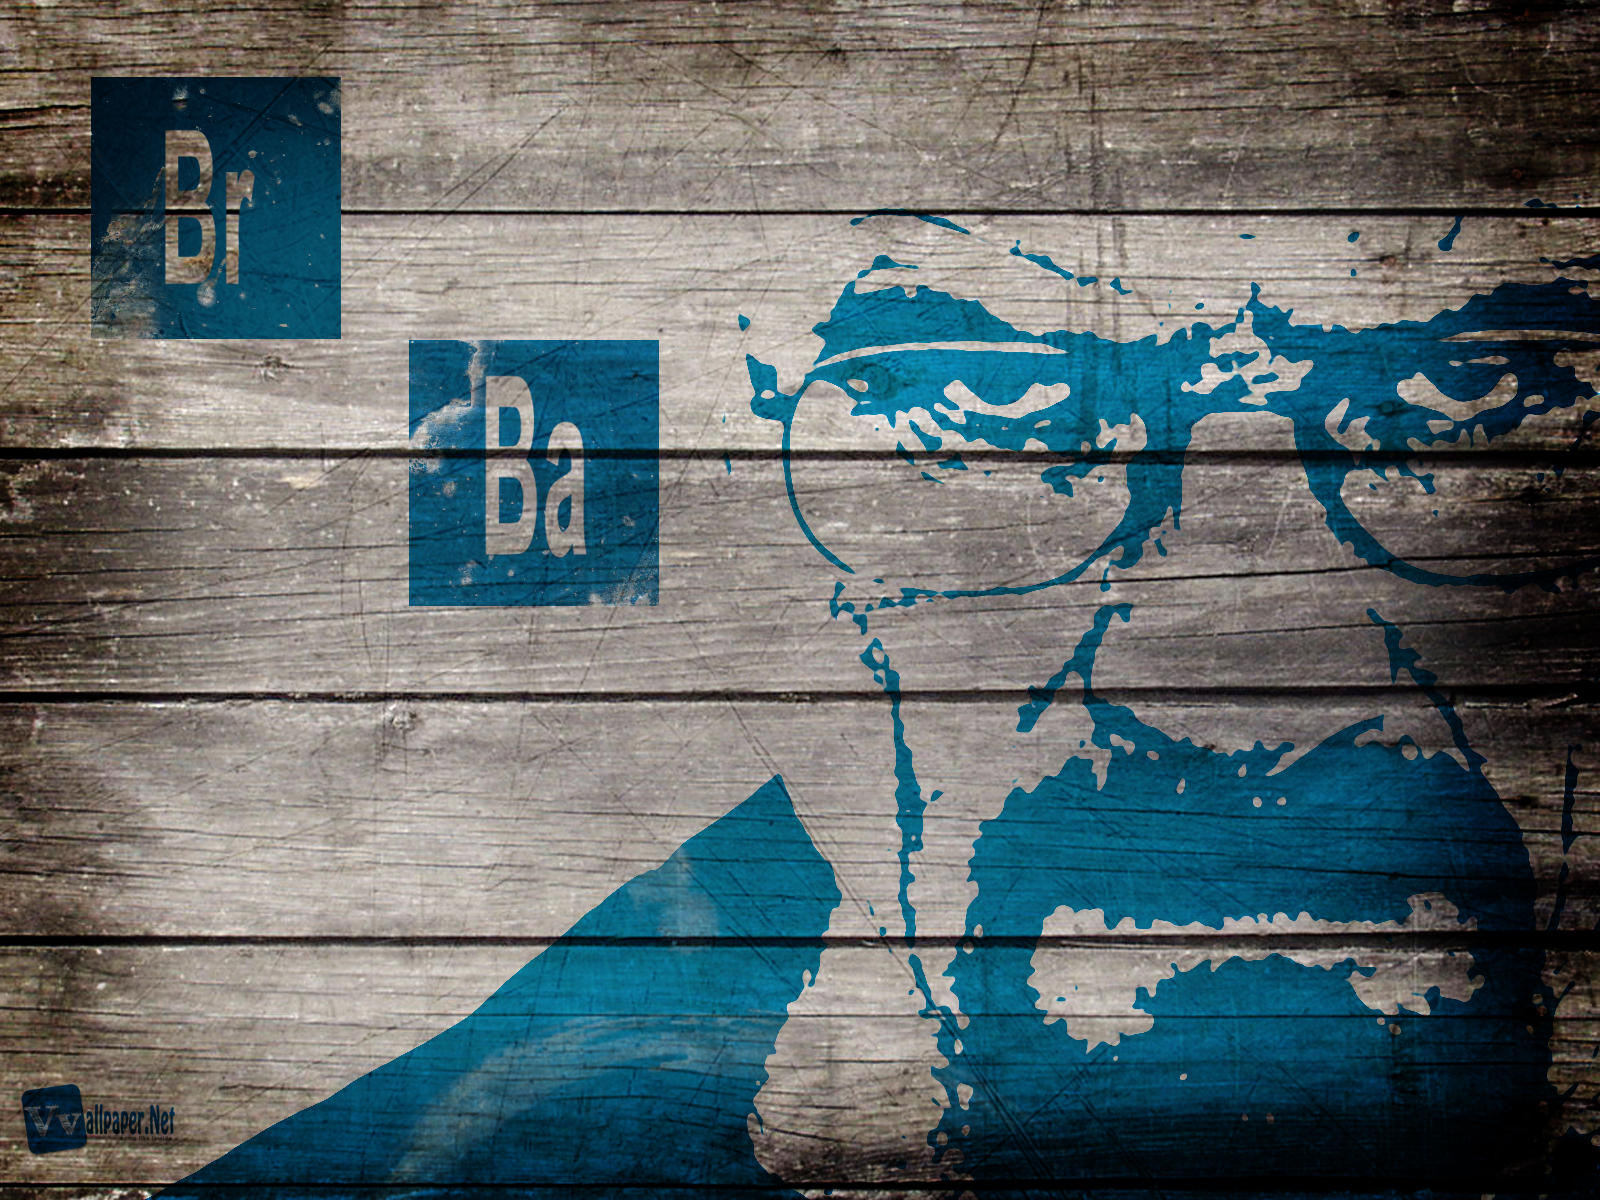 Bad Walter White And Jesse Pinkman HD Wallpaper Image To